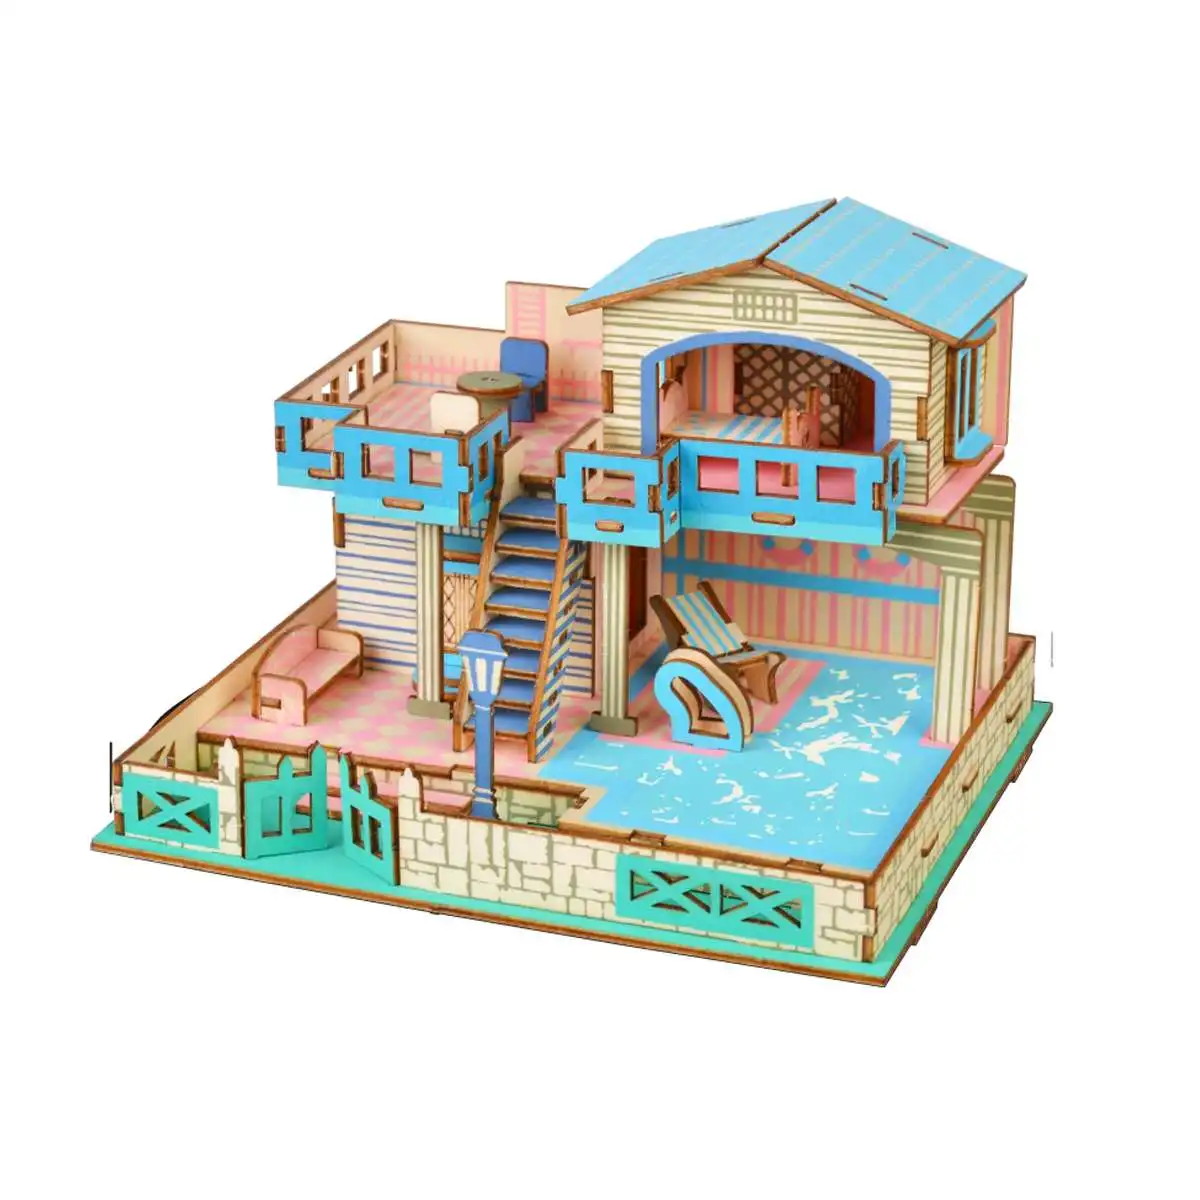 

Kids 3D Wooden Puzzle Dollhouse Fantasy Villa DIY Assembled Building Model Miniature Kits Educational Toys For Children gift